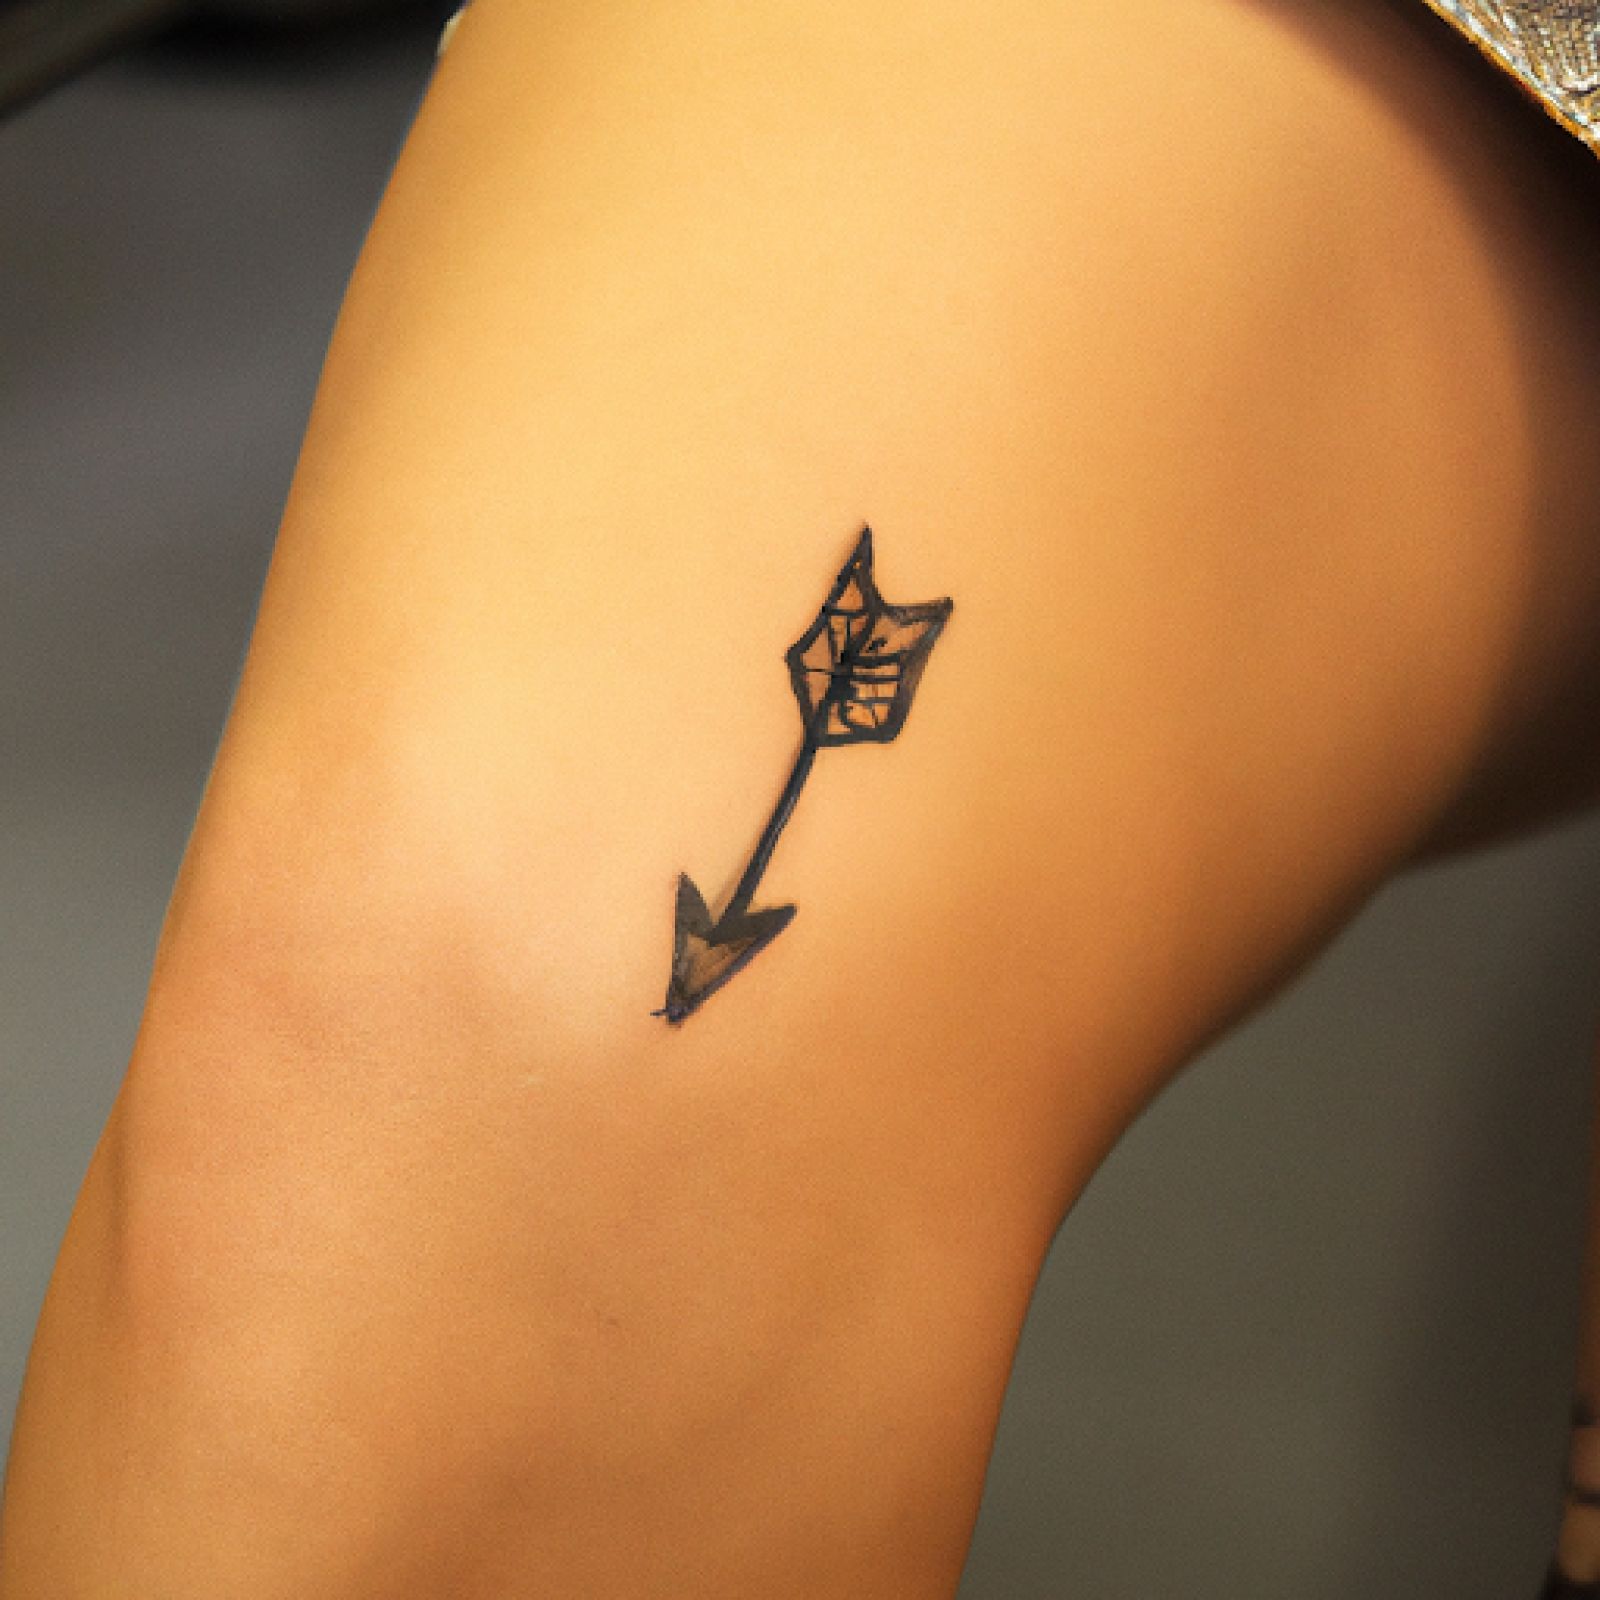 Arrow tattoo on knee for women